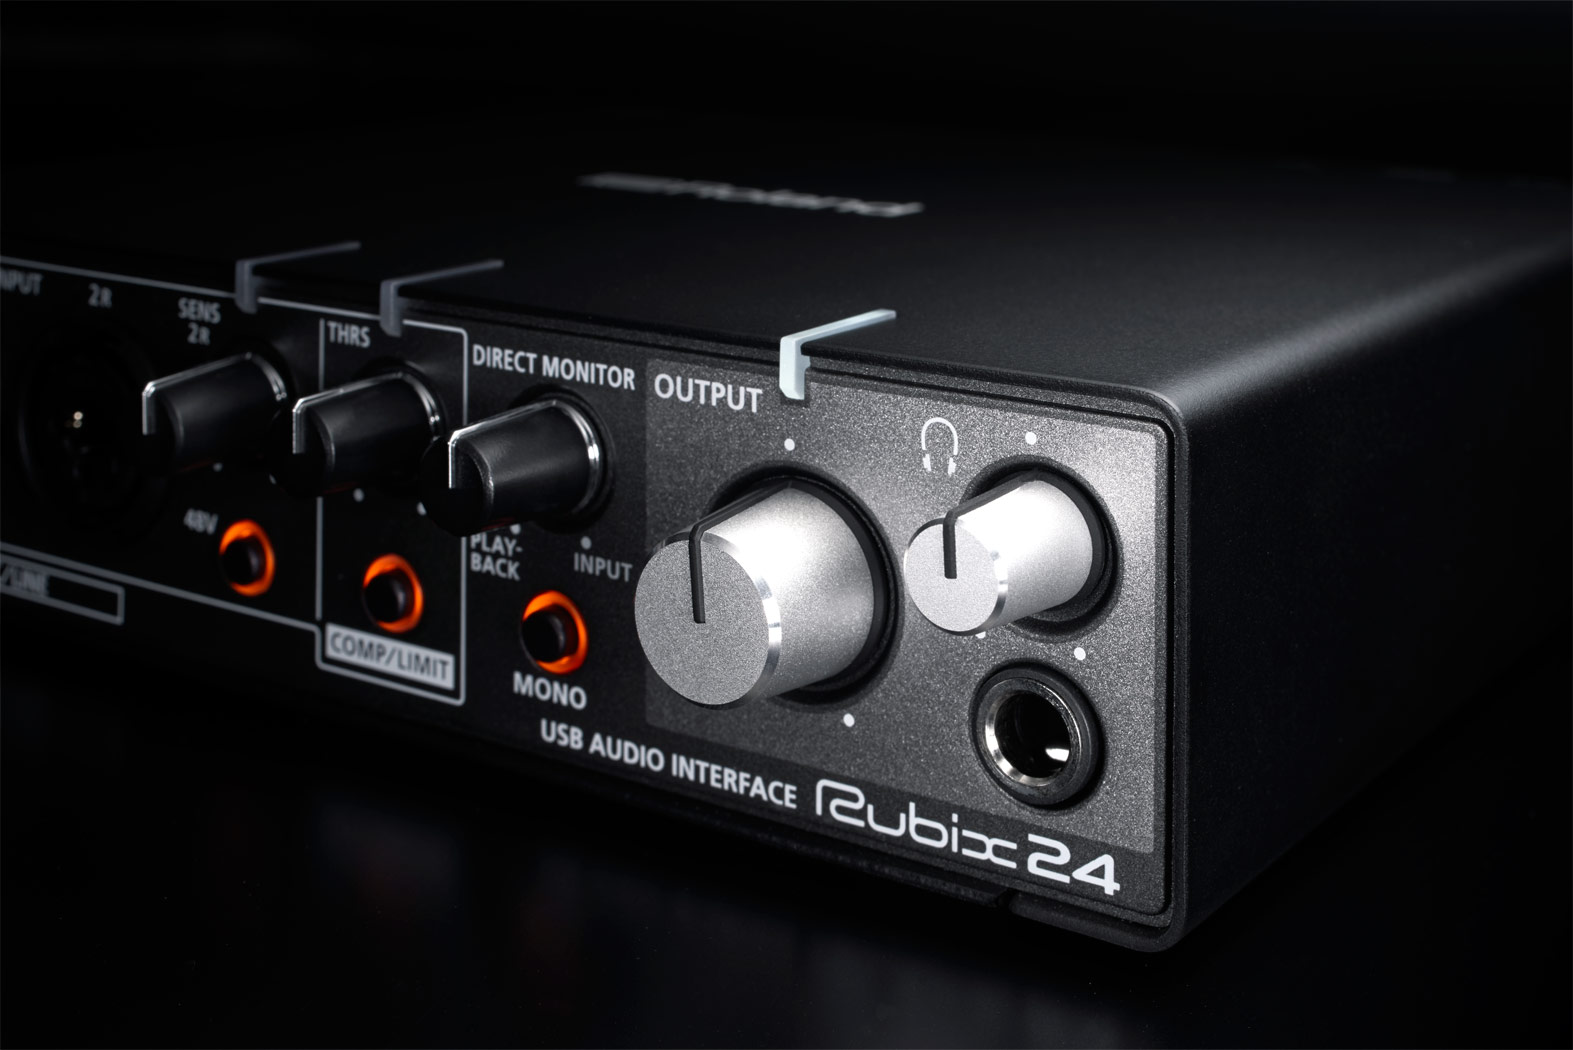 Roland Rubix 44 Audio Interface